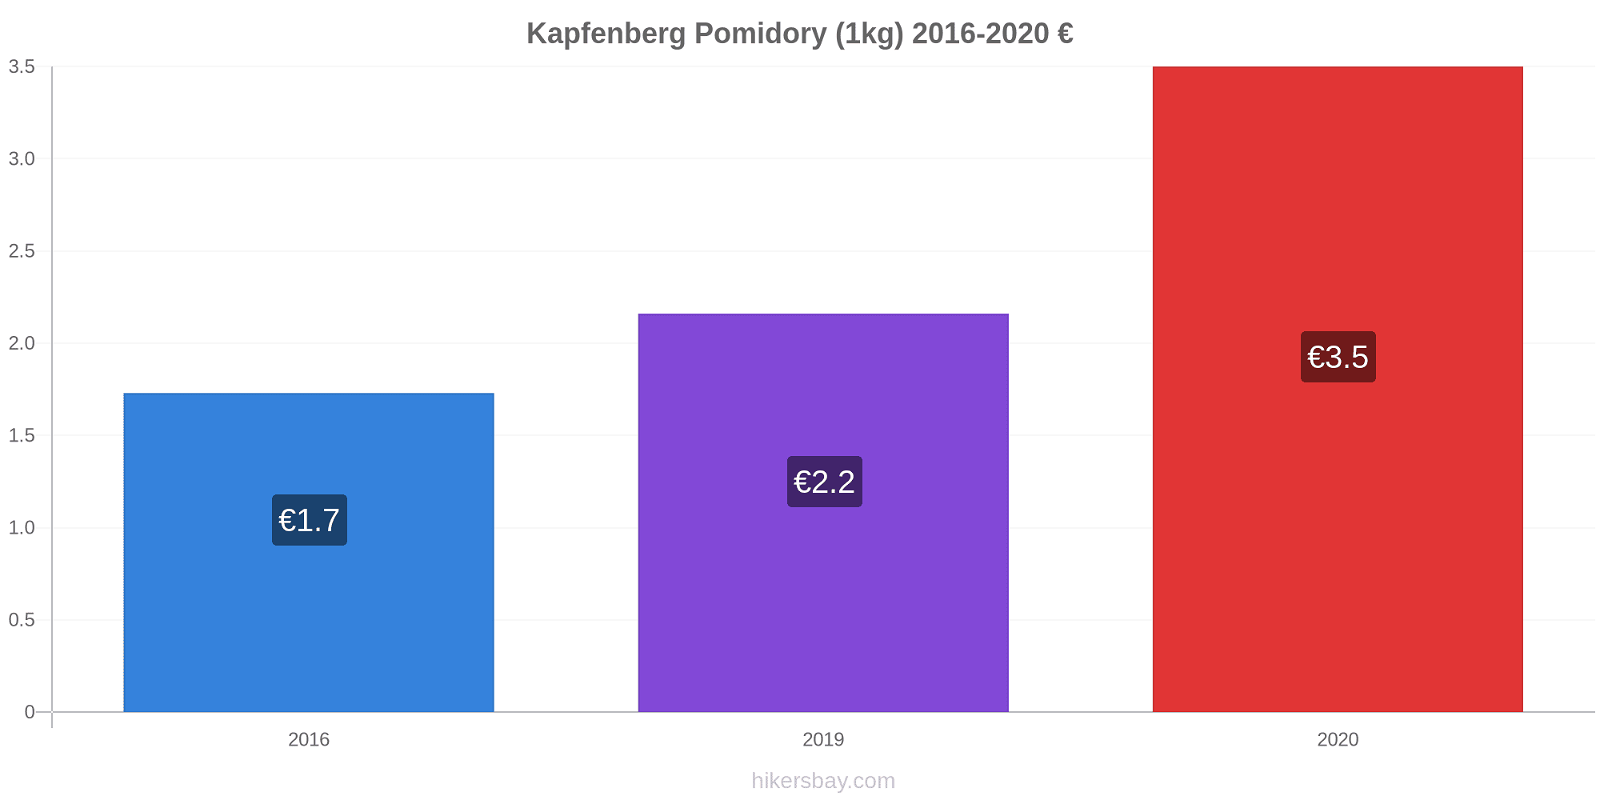 Kapfenberg zmiany cen Pomidory (1kg) hikersbay.com